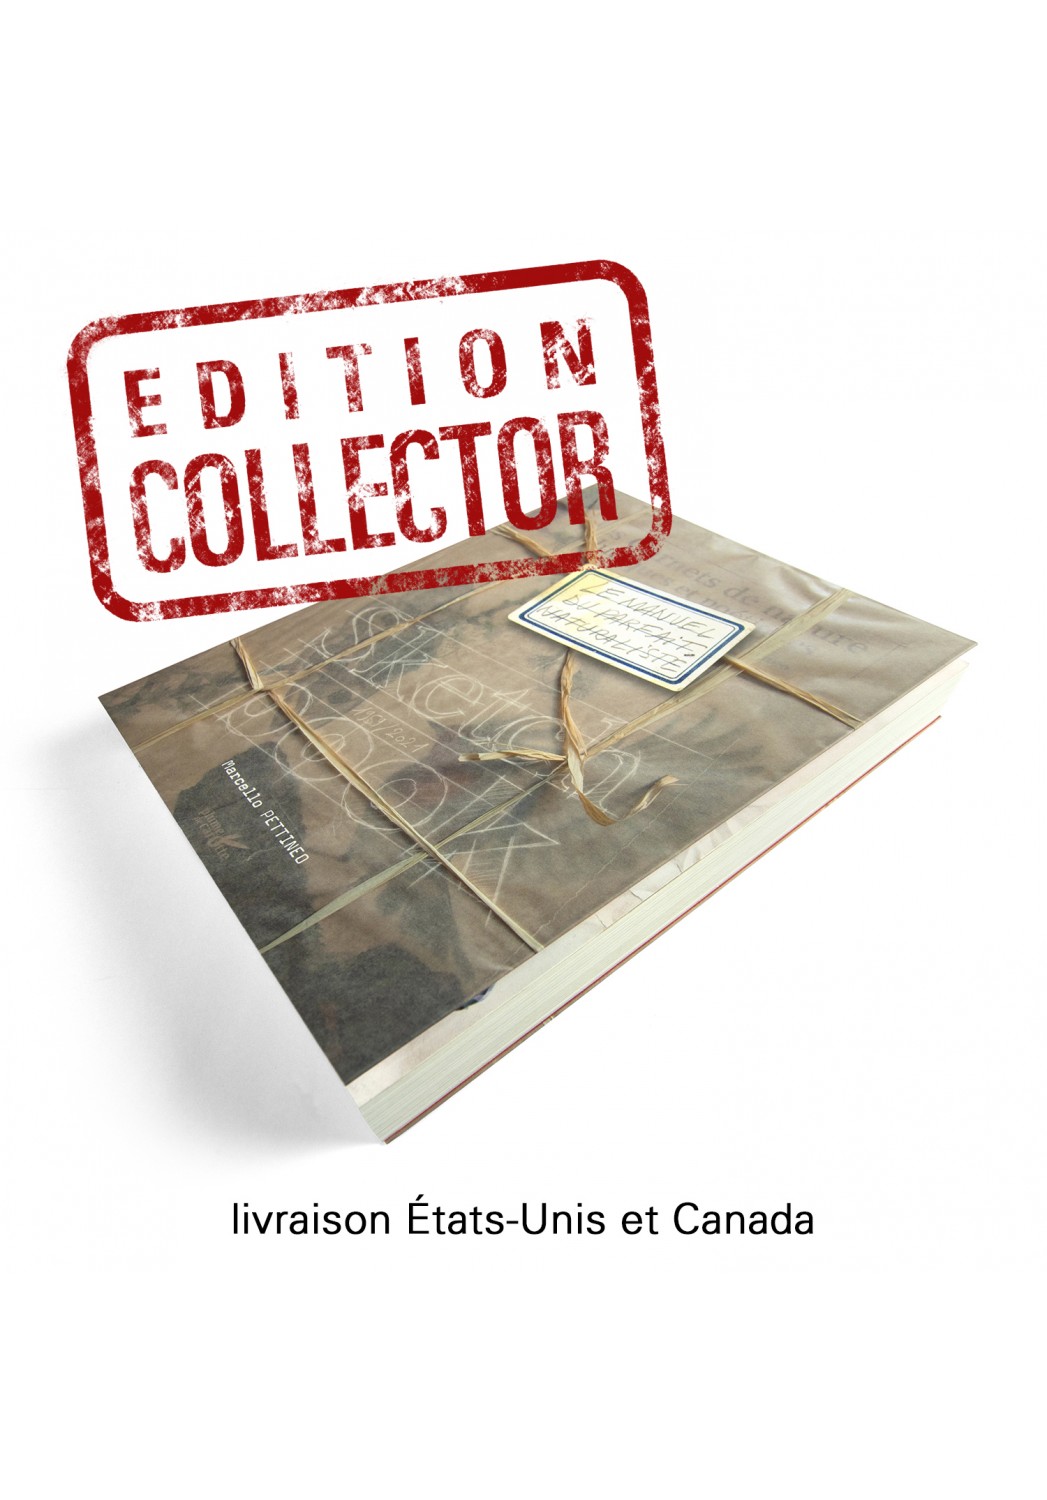 Marcello-art: Books Marcello-art: The Manual collector edition : delivery United States and Canada